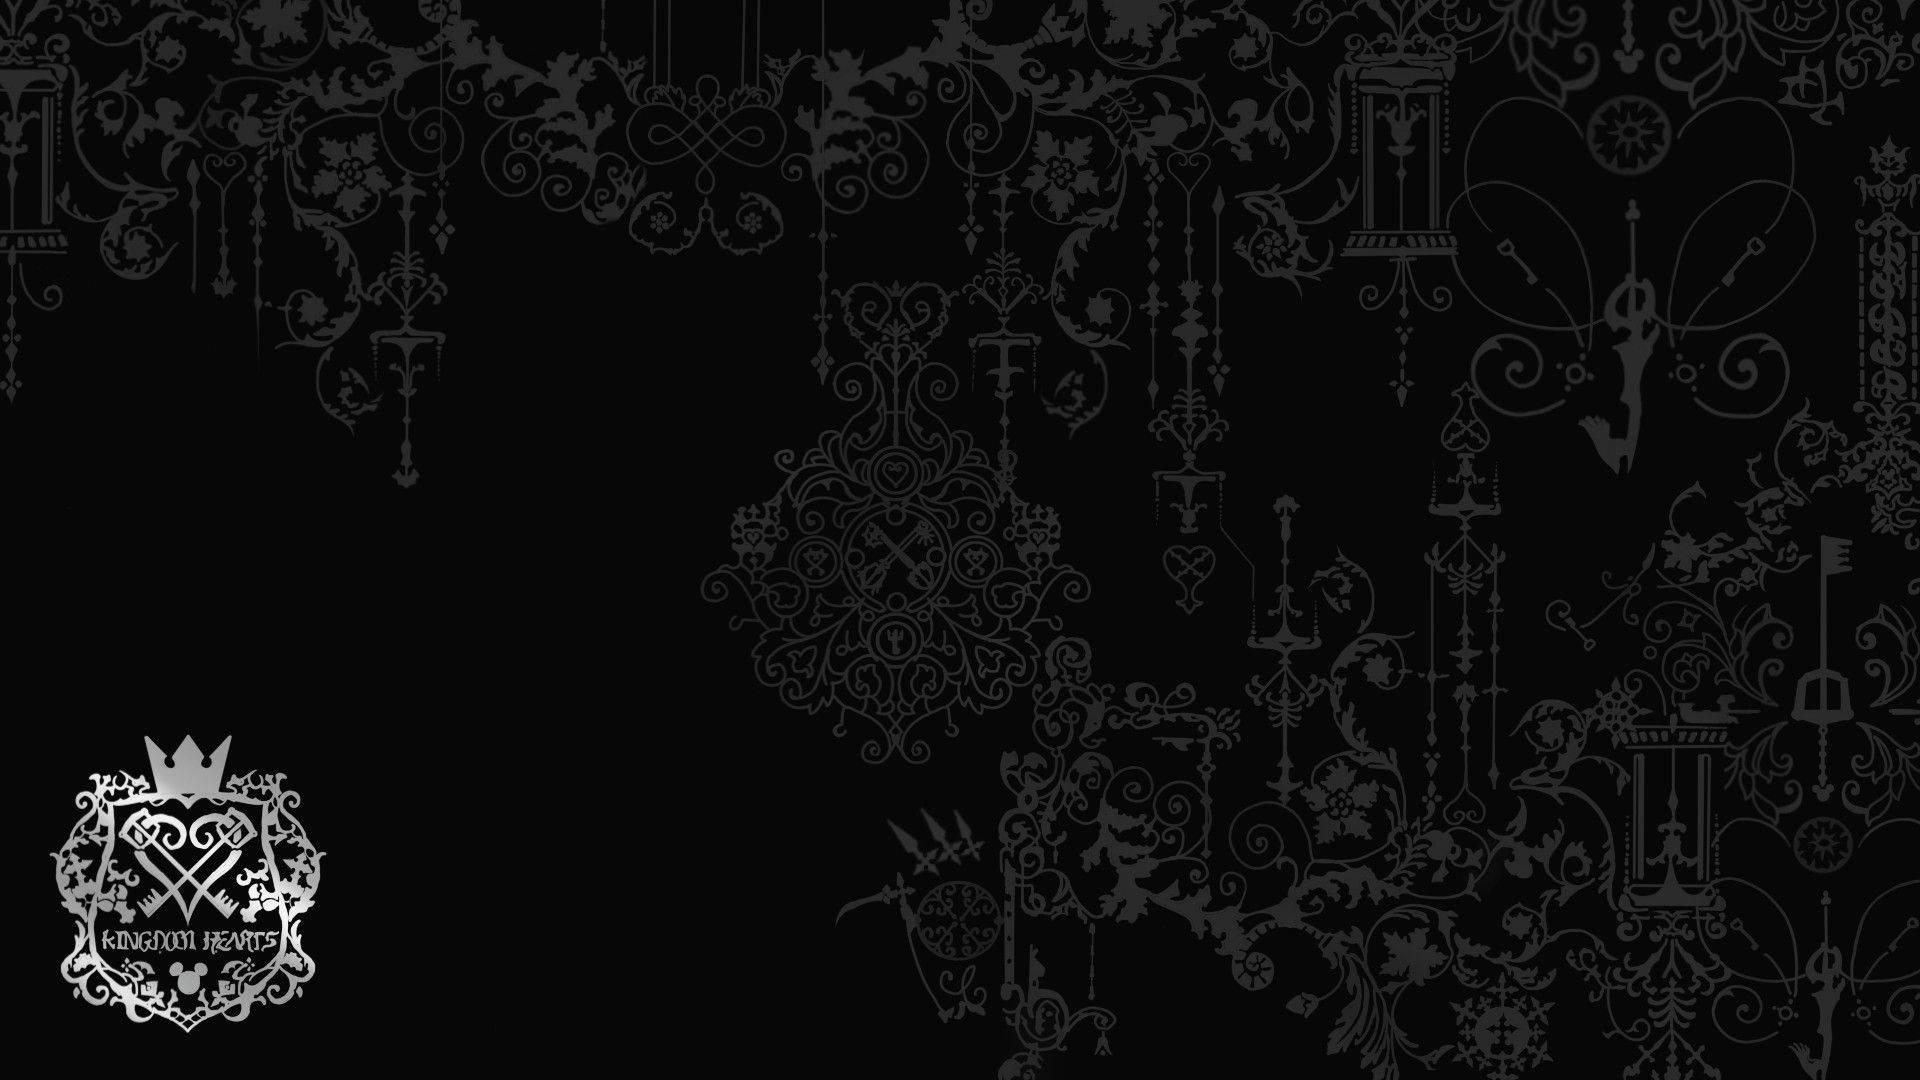 “Unlock the mysteries of Kingdom Hearts 3” Wallpaper